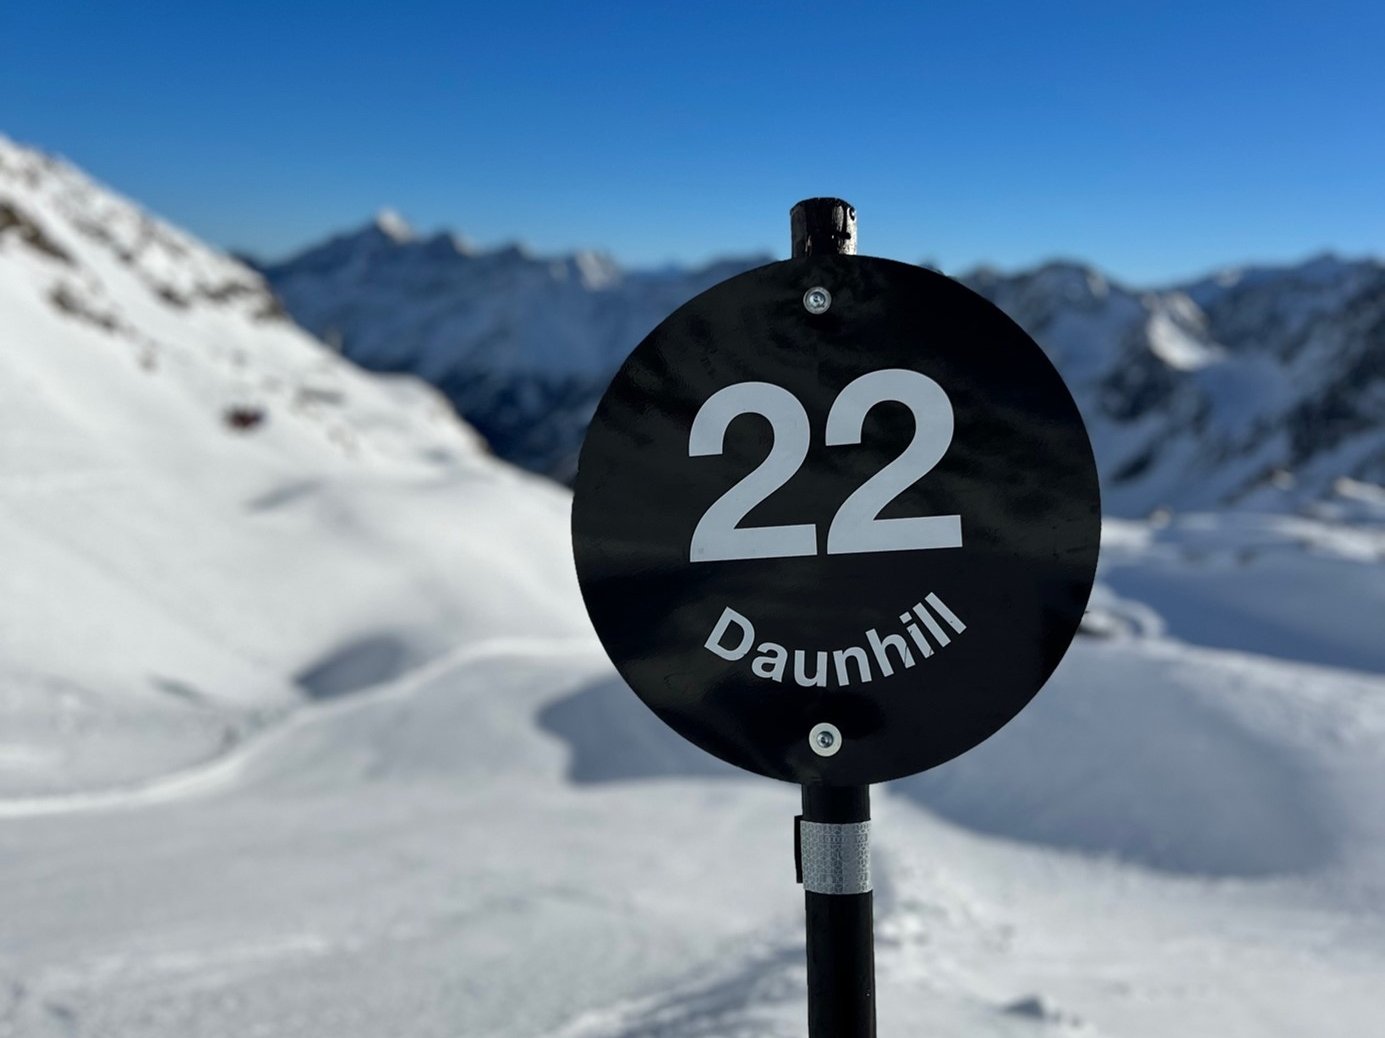 Daunhill Schild am Stubaier Gletscher